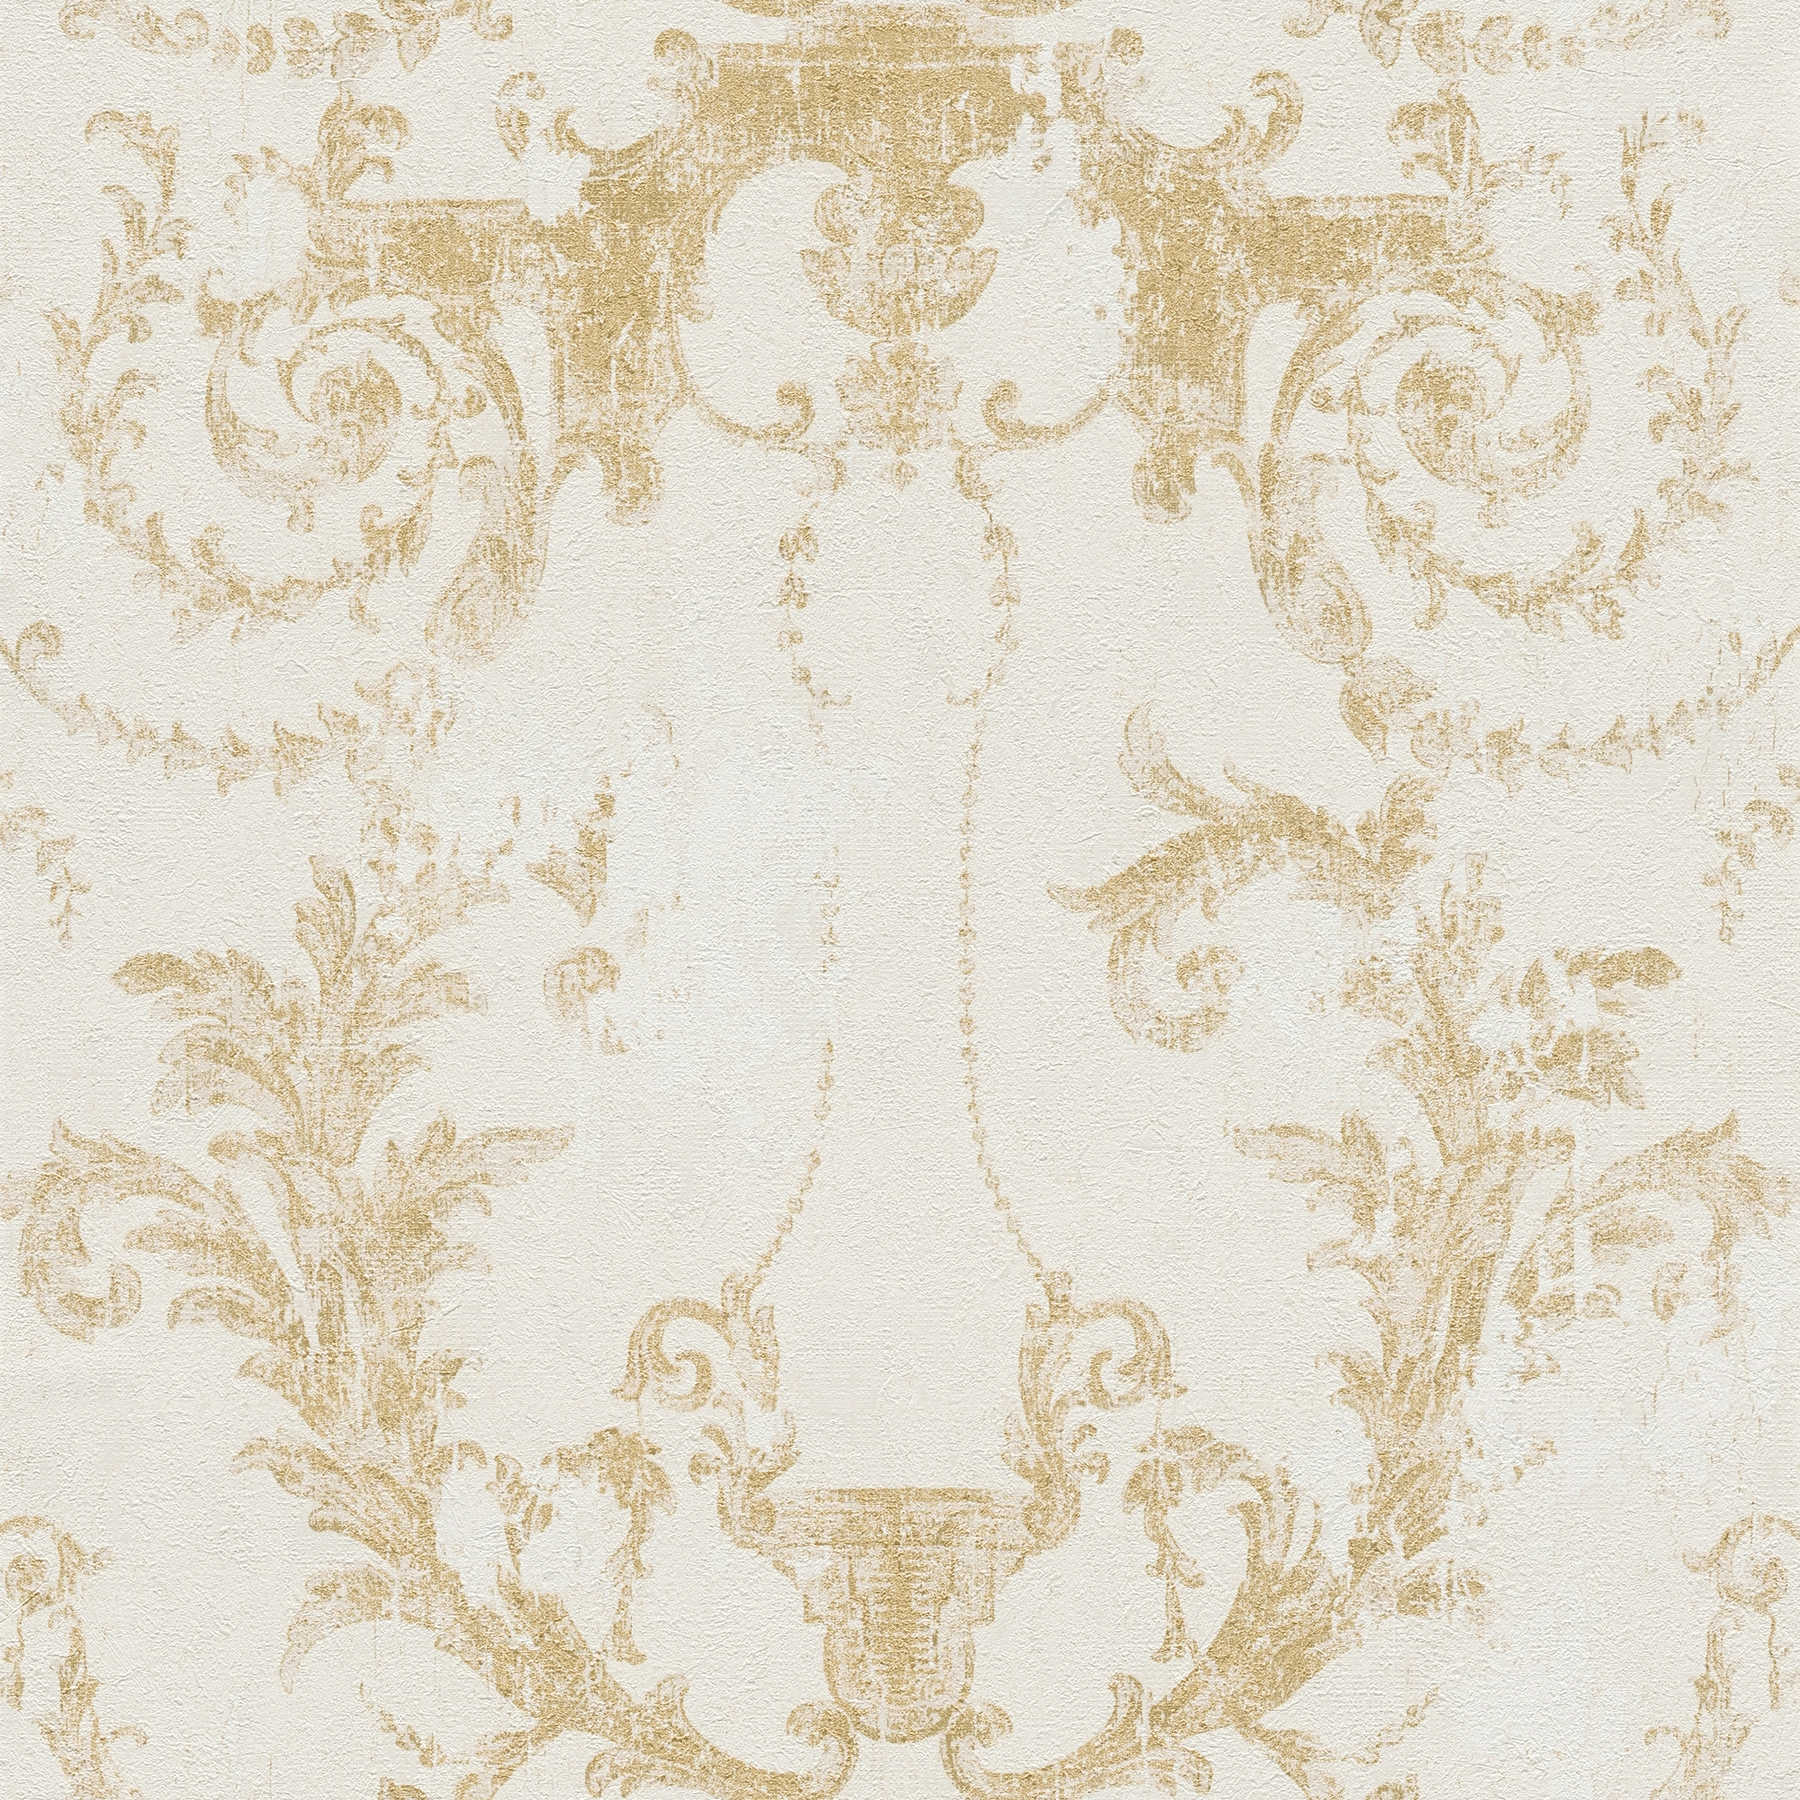         Ornament wallpaper vintage style & rustic - gold, cream
    